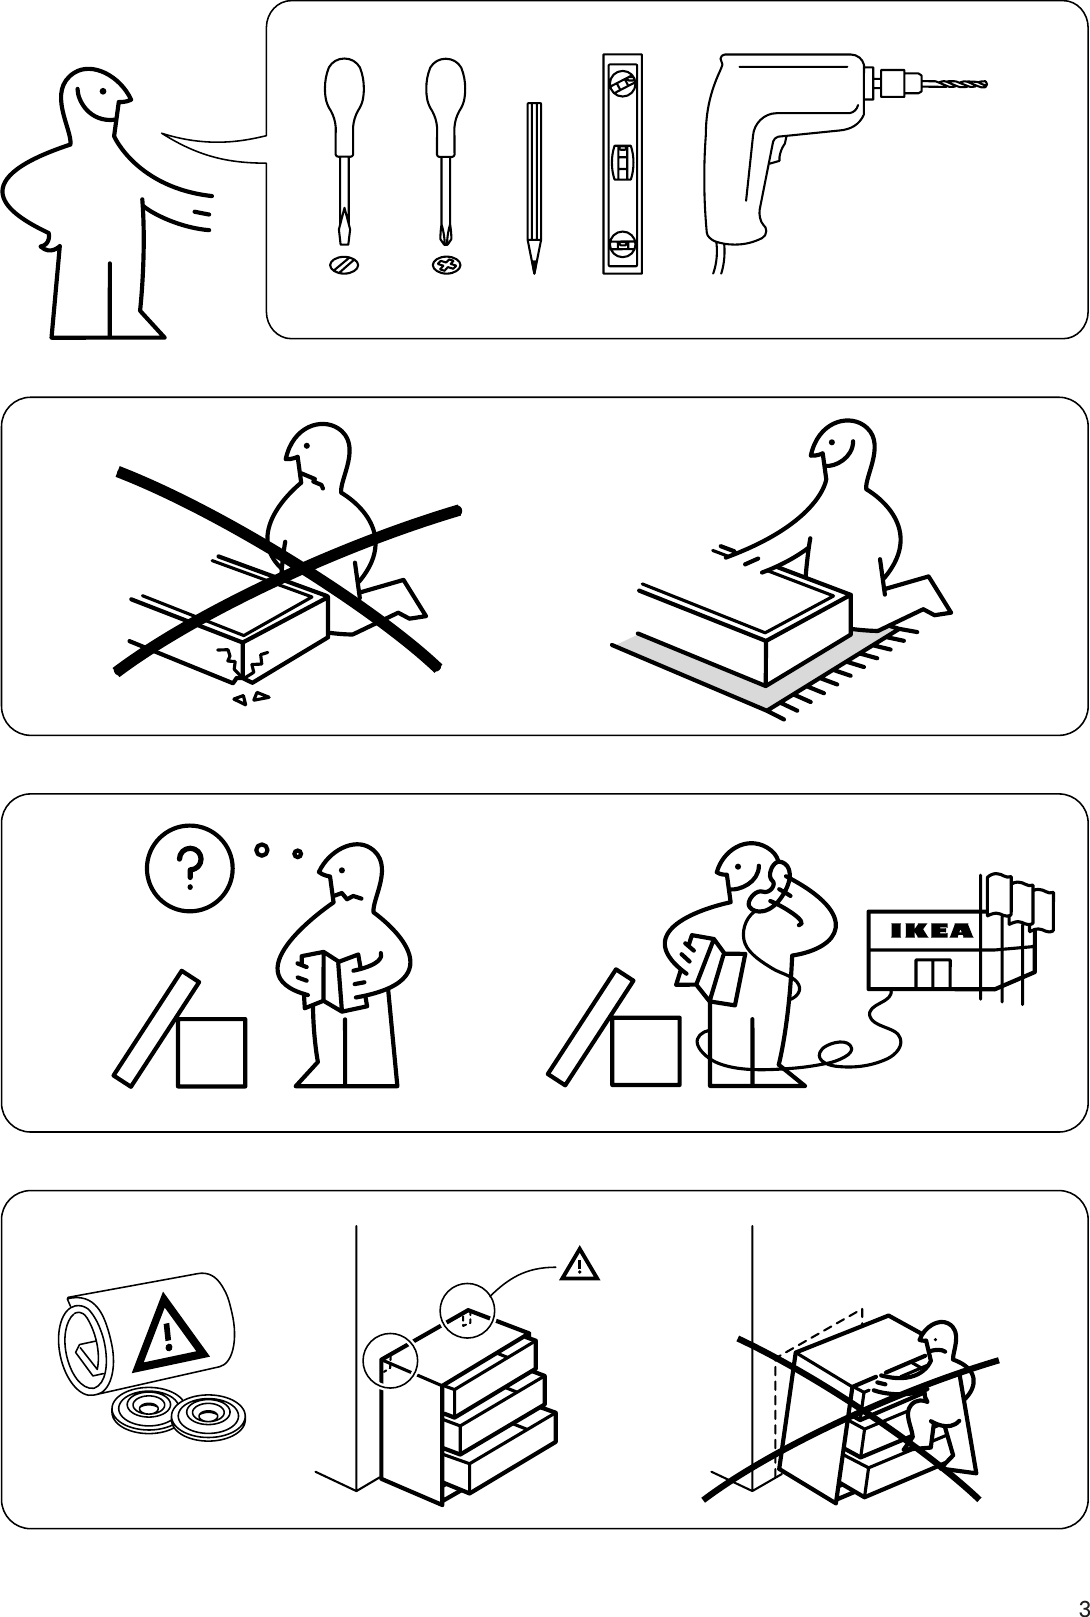 Page 3 of 12 - Ikea Ikea-Traby-Shelf-Unit-16X16-Assembly-Instruction